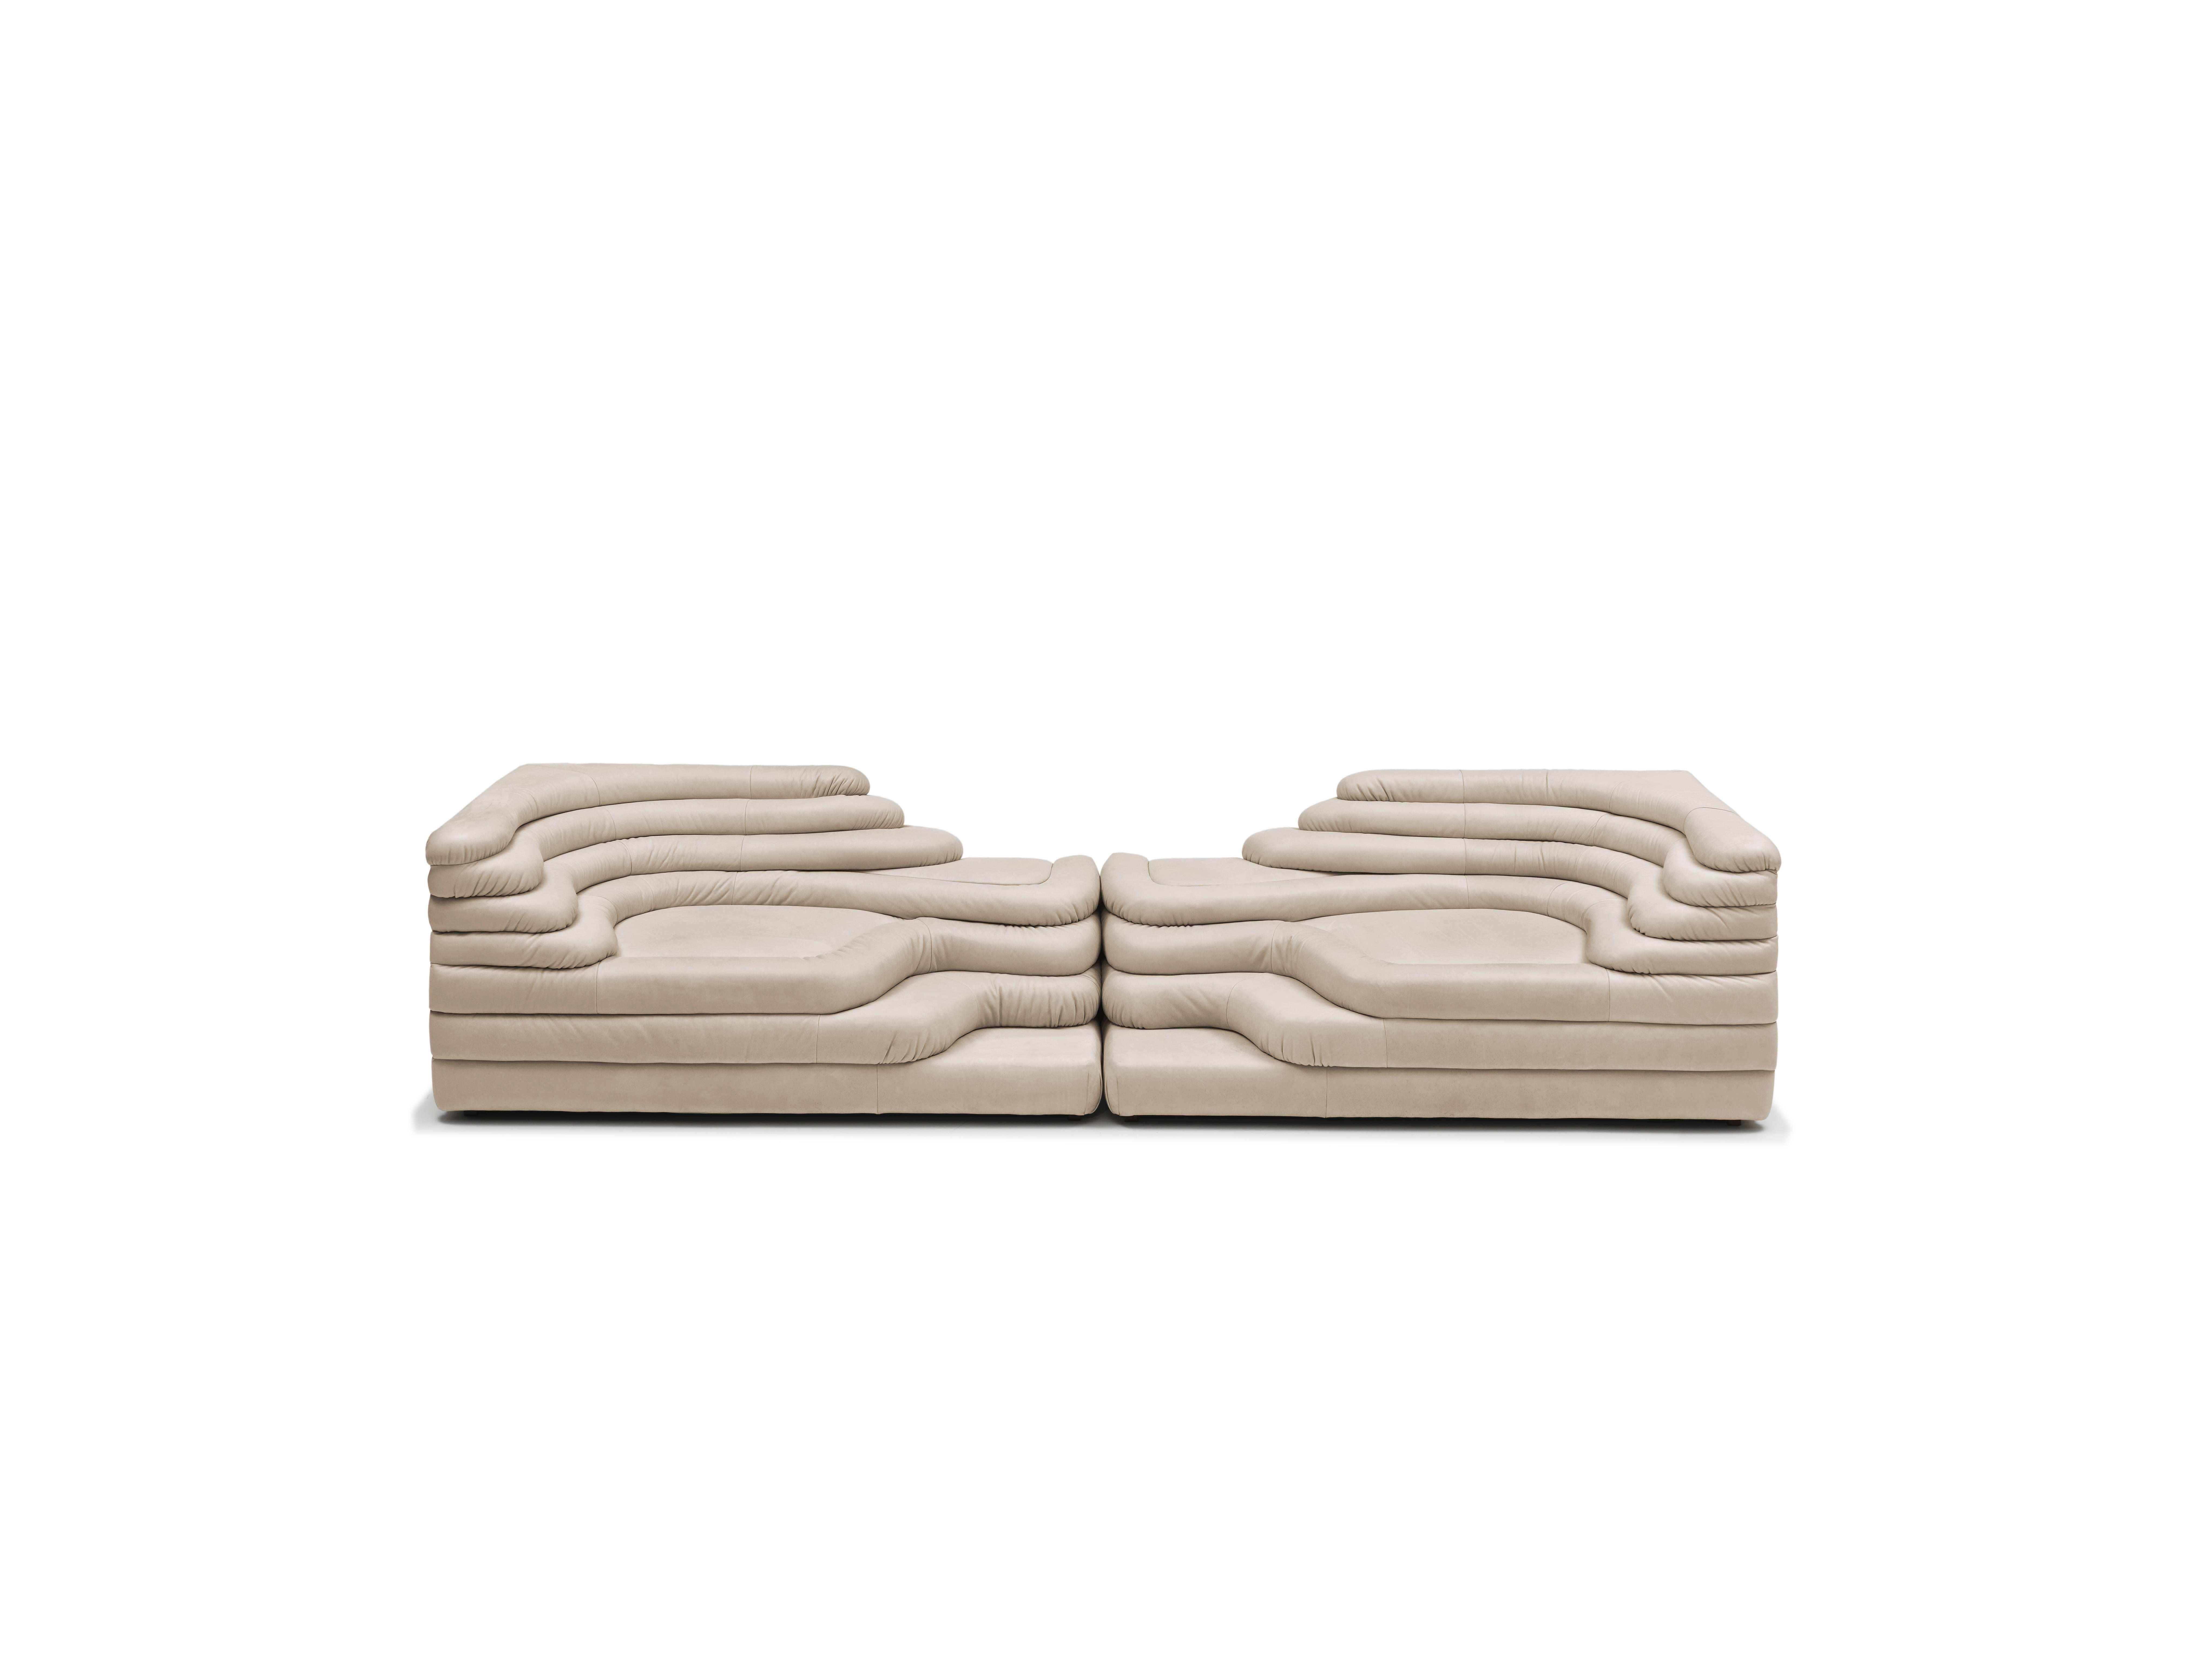 Swiss De Sede DS-1025/09 Terrazza Sofa in Perla Upholstery by Ubald Klug, 1 Element For Sale